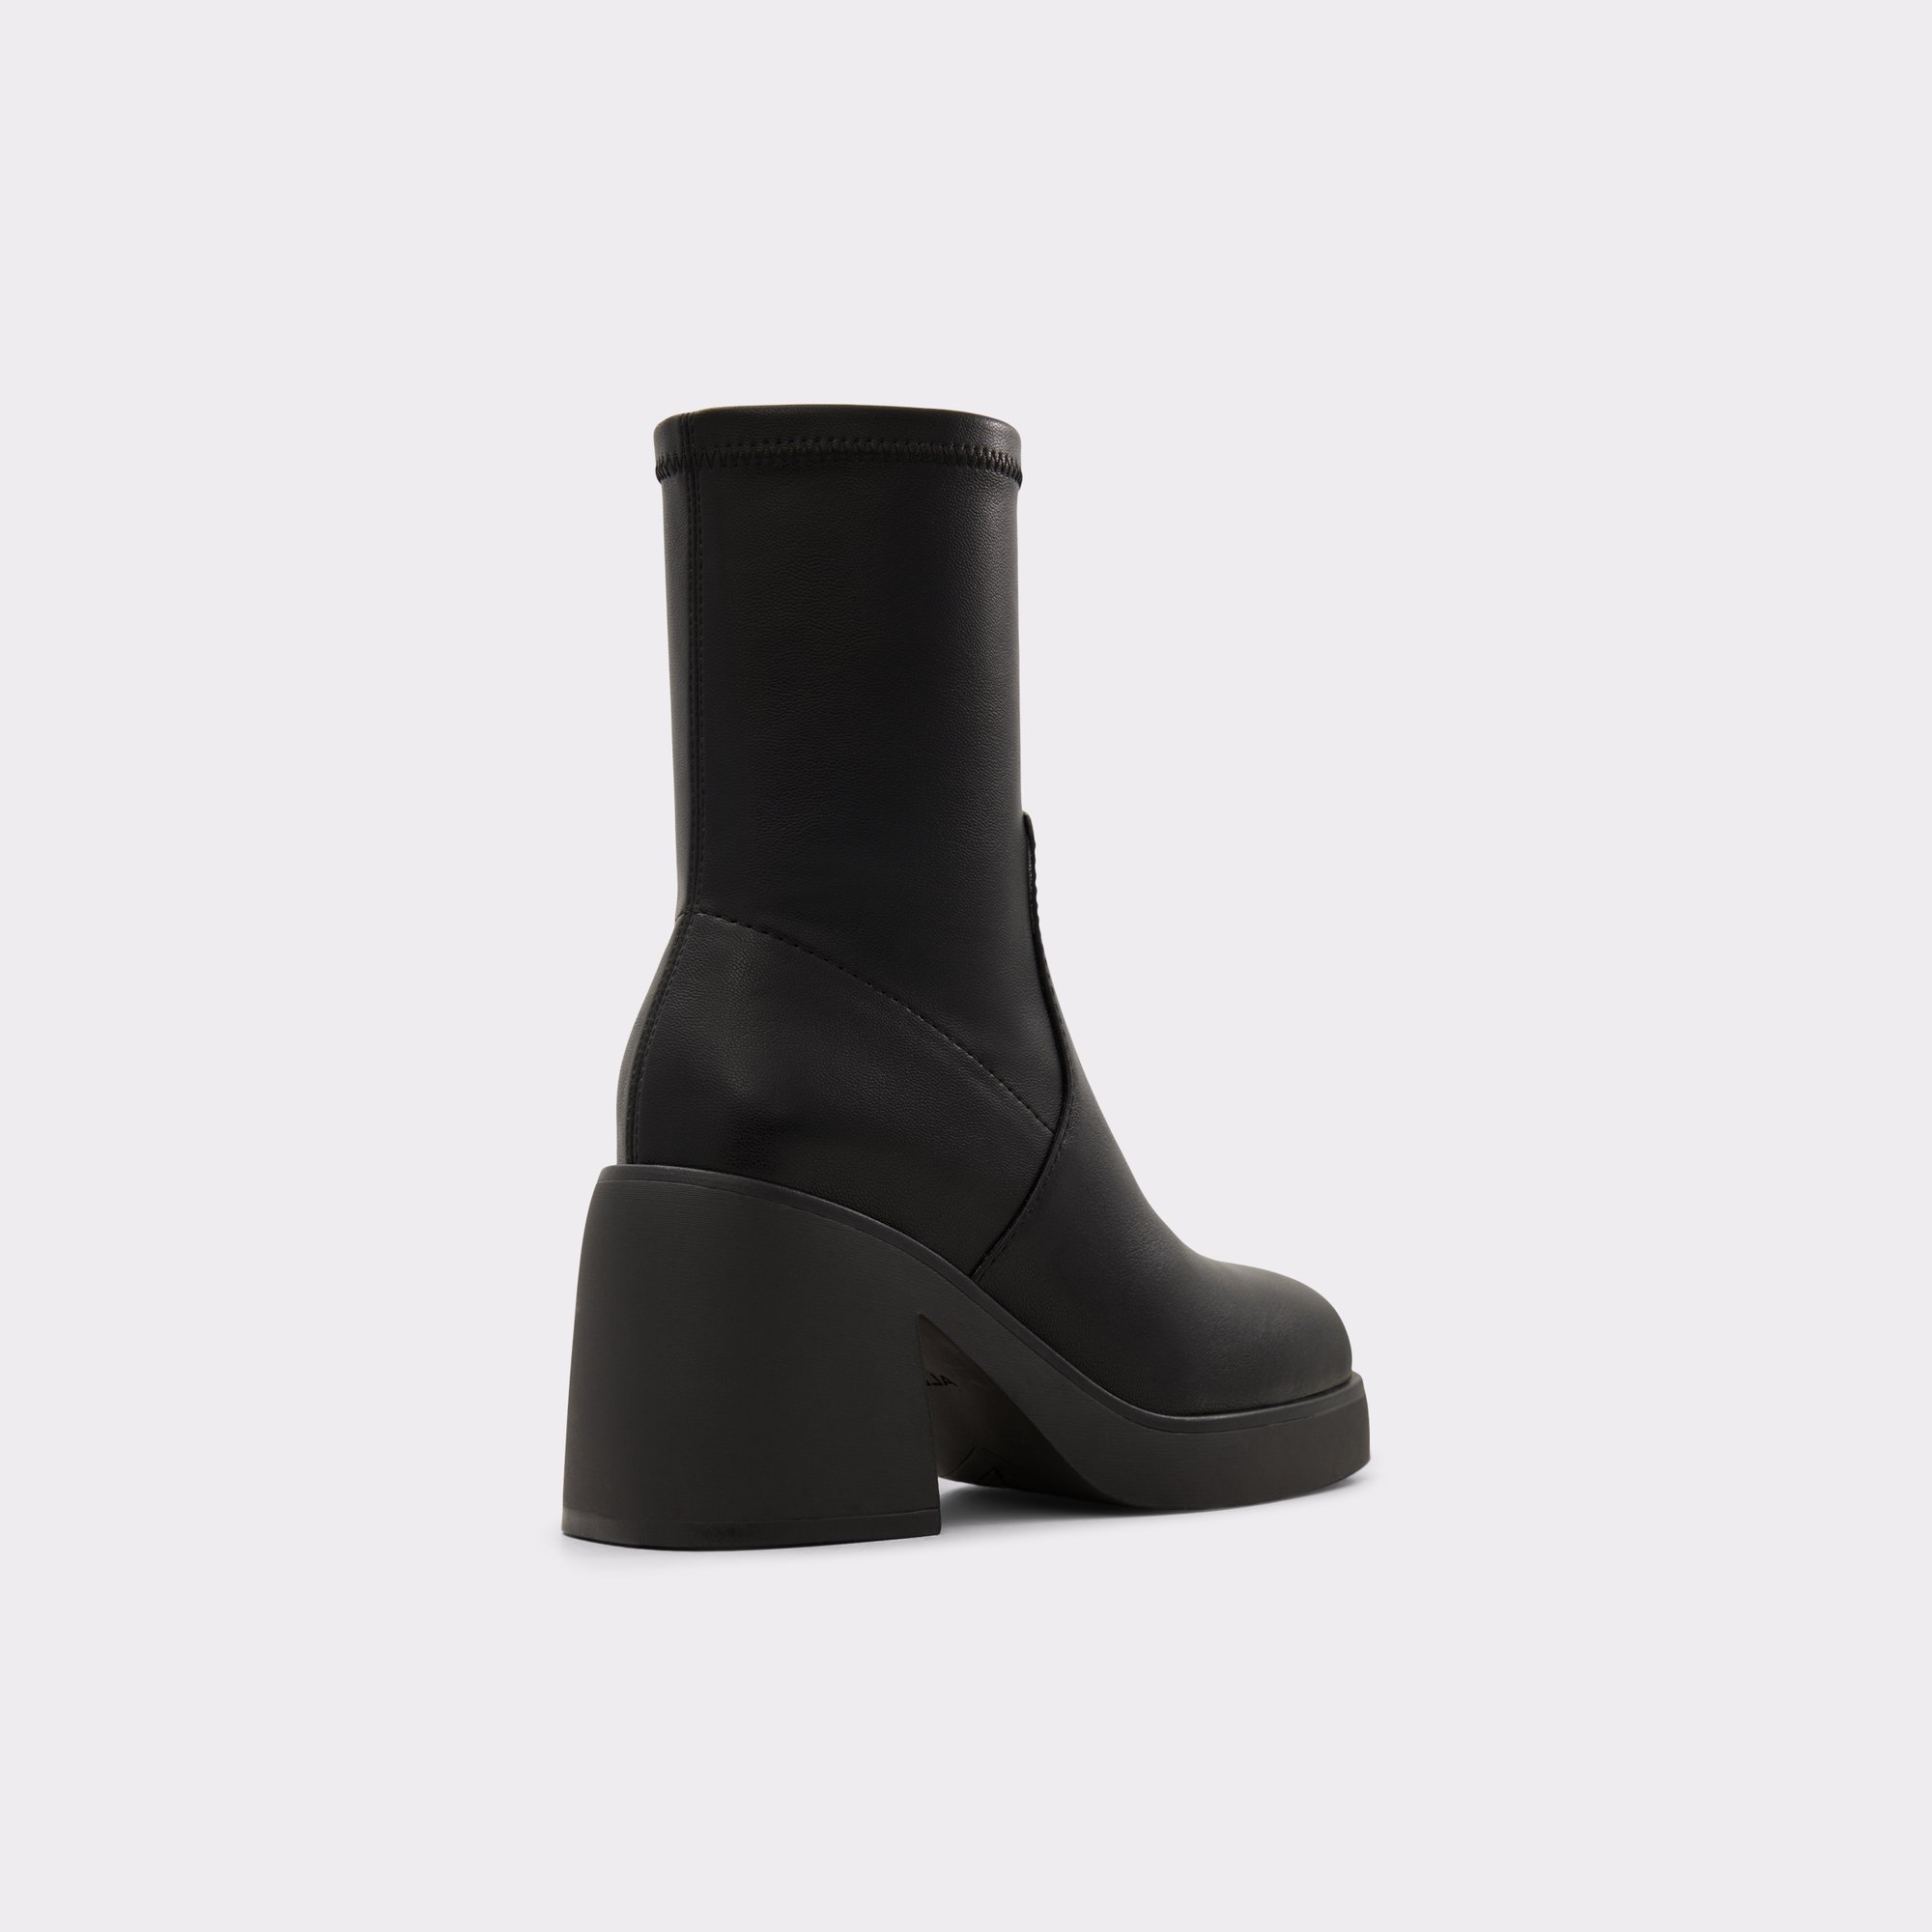 Persona Black Synthetic Women's Casual boots | ALDO US